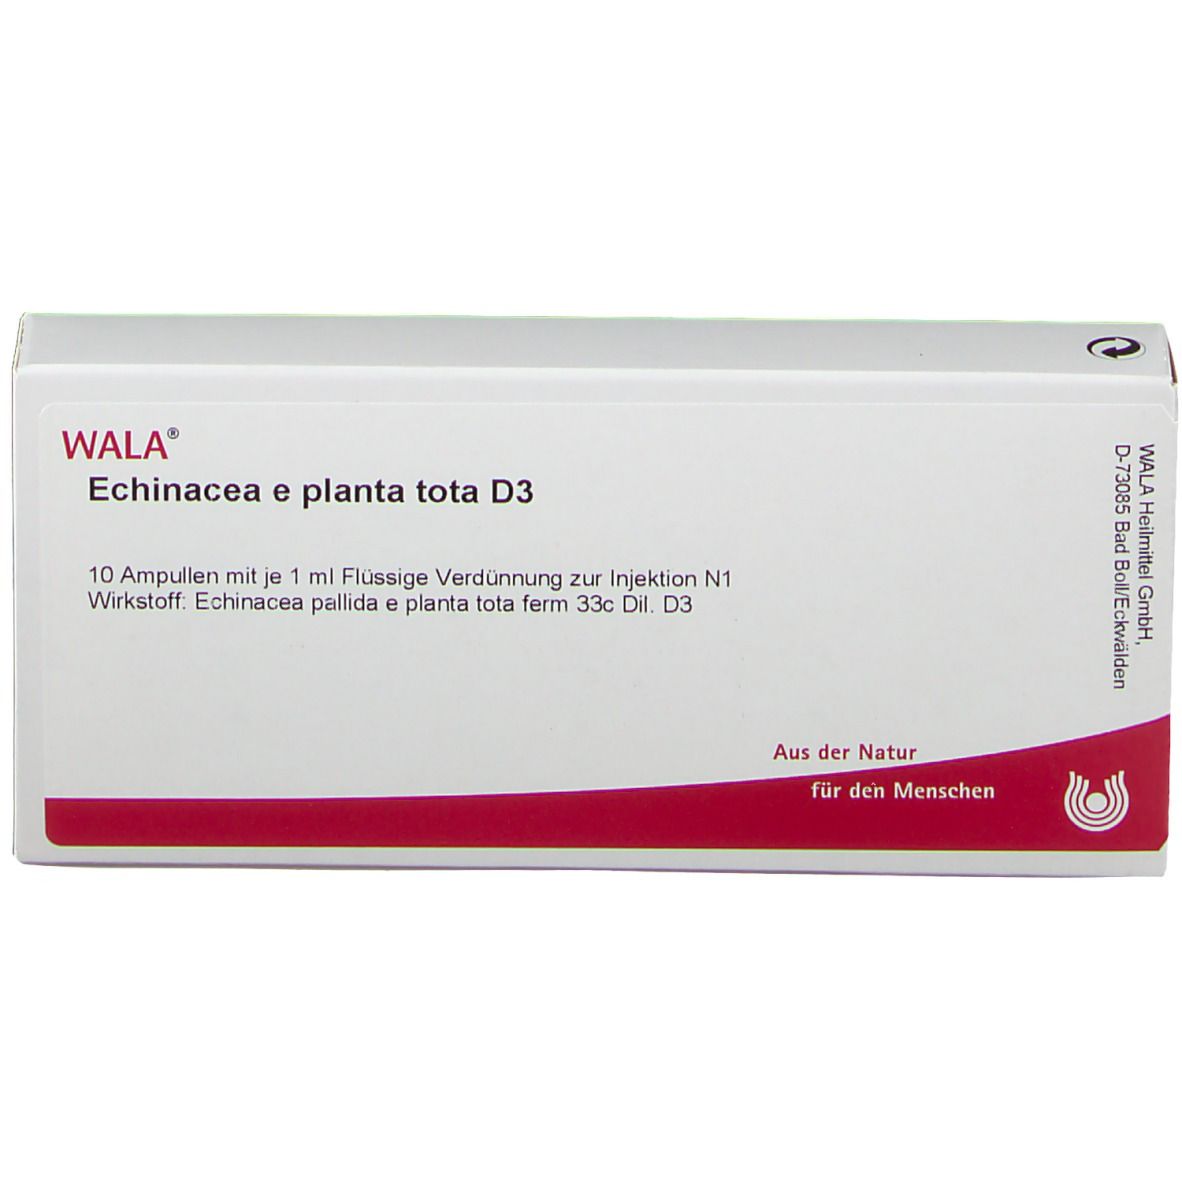 WALA® Echinacea E Planta Tota D 3 Amp.